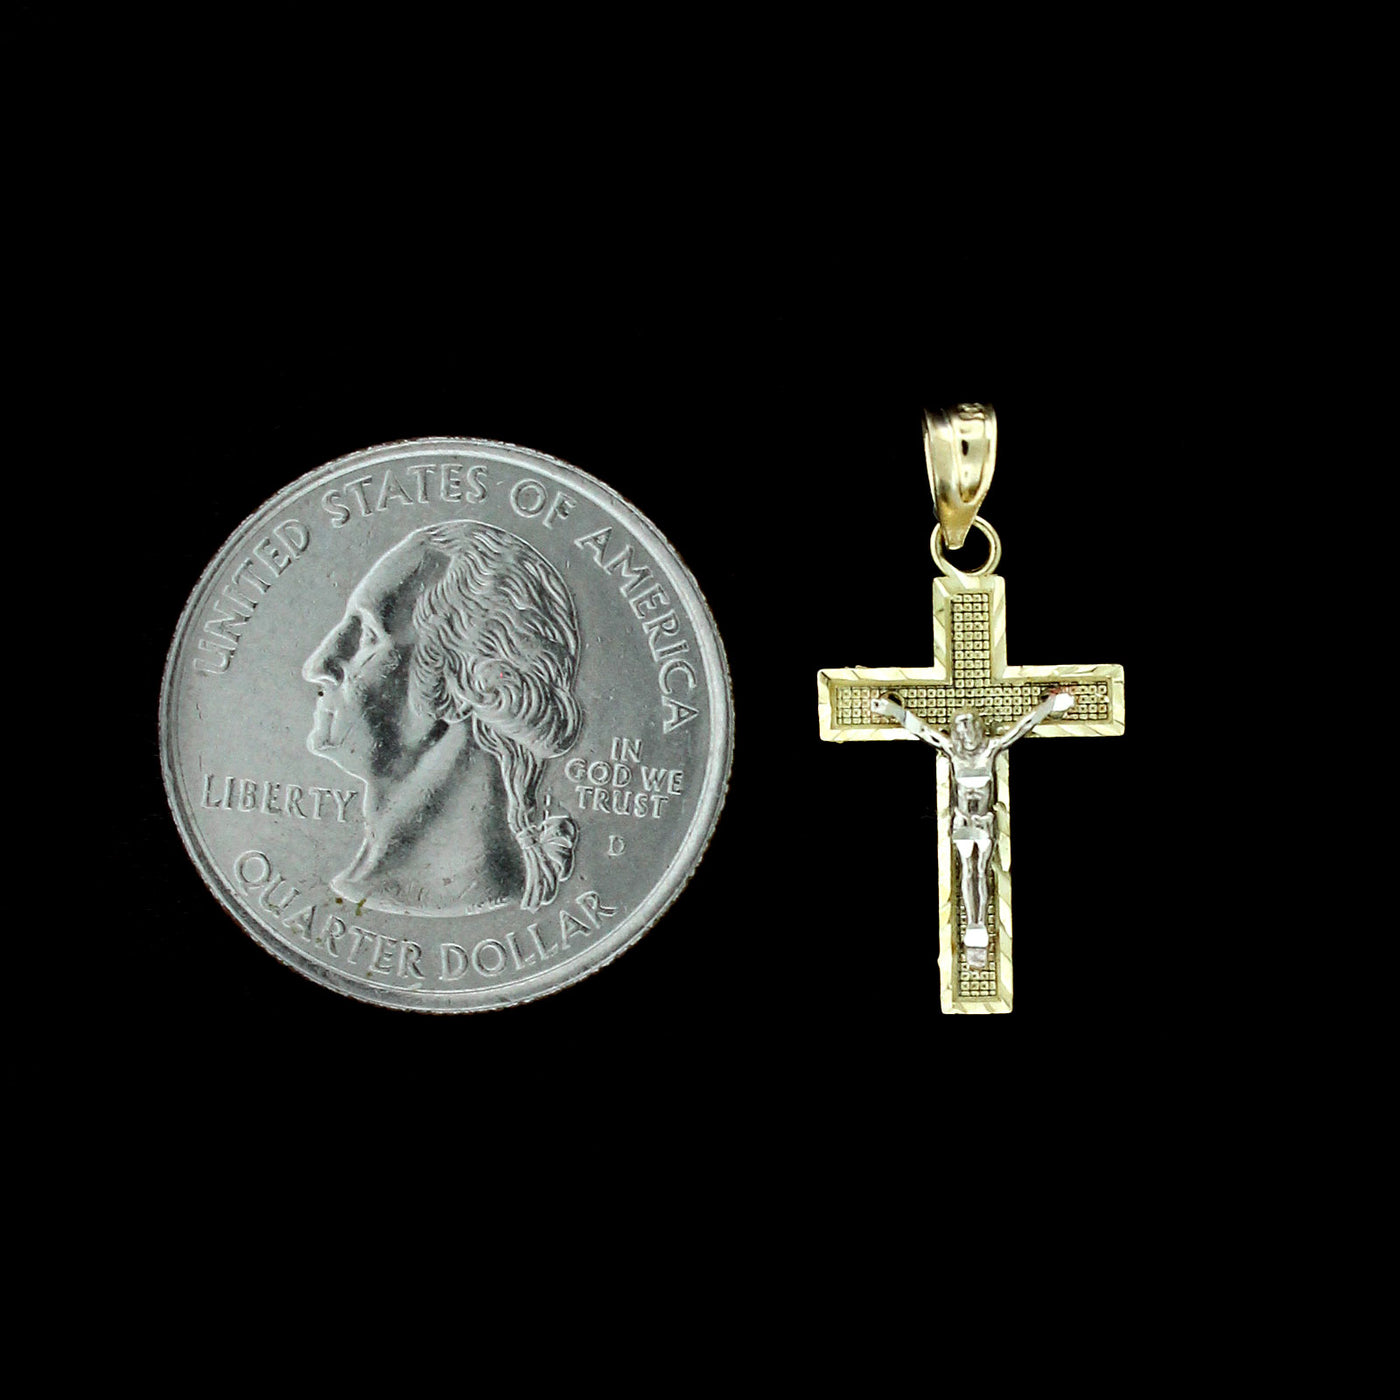 10K Real Yellow Gold Diamond Cut Jesus Crucifix Cross Pendant & 2.5mm Rope Chain Necklace Set